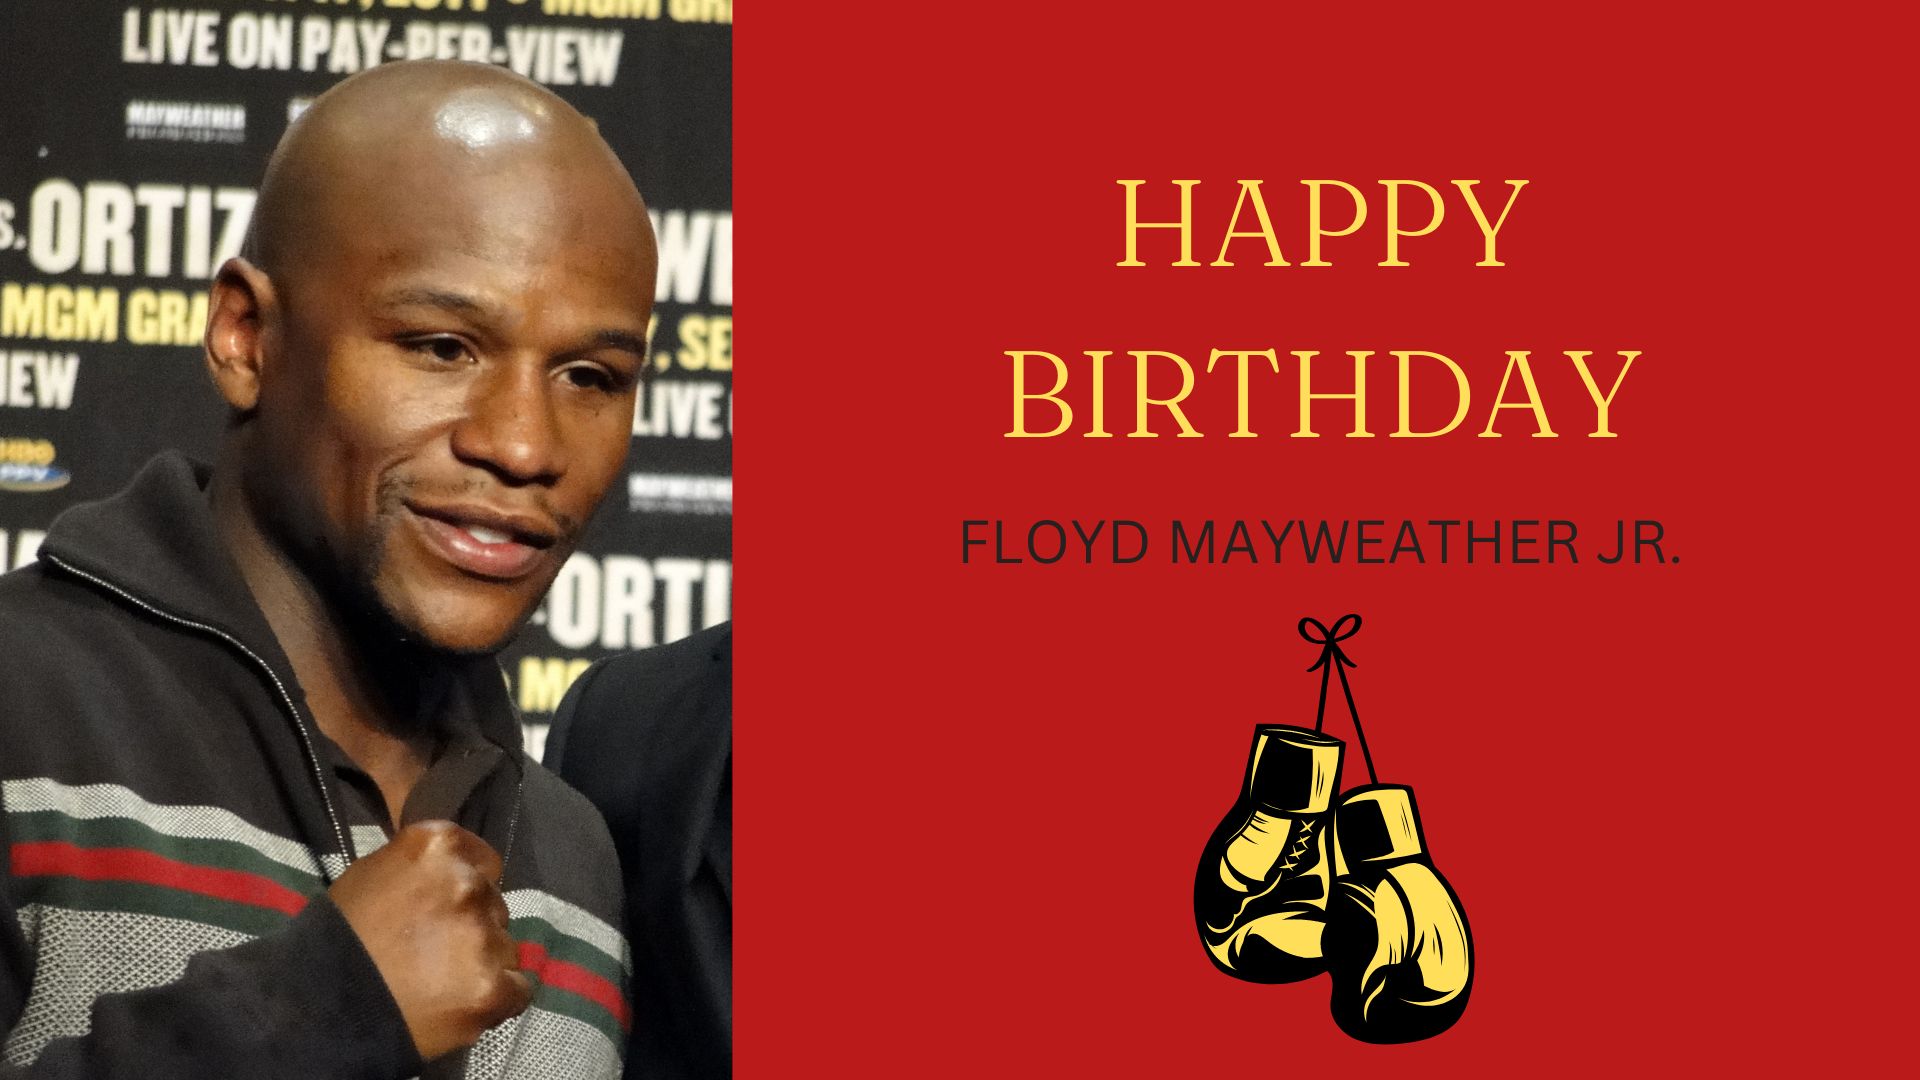  HAPPY BIRTHDAY! Box Floyd Mayweather Jr. (from Michigan!) turns 46 today. 